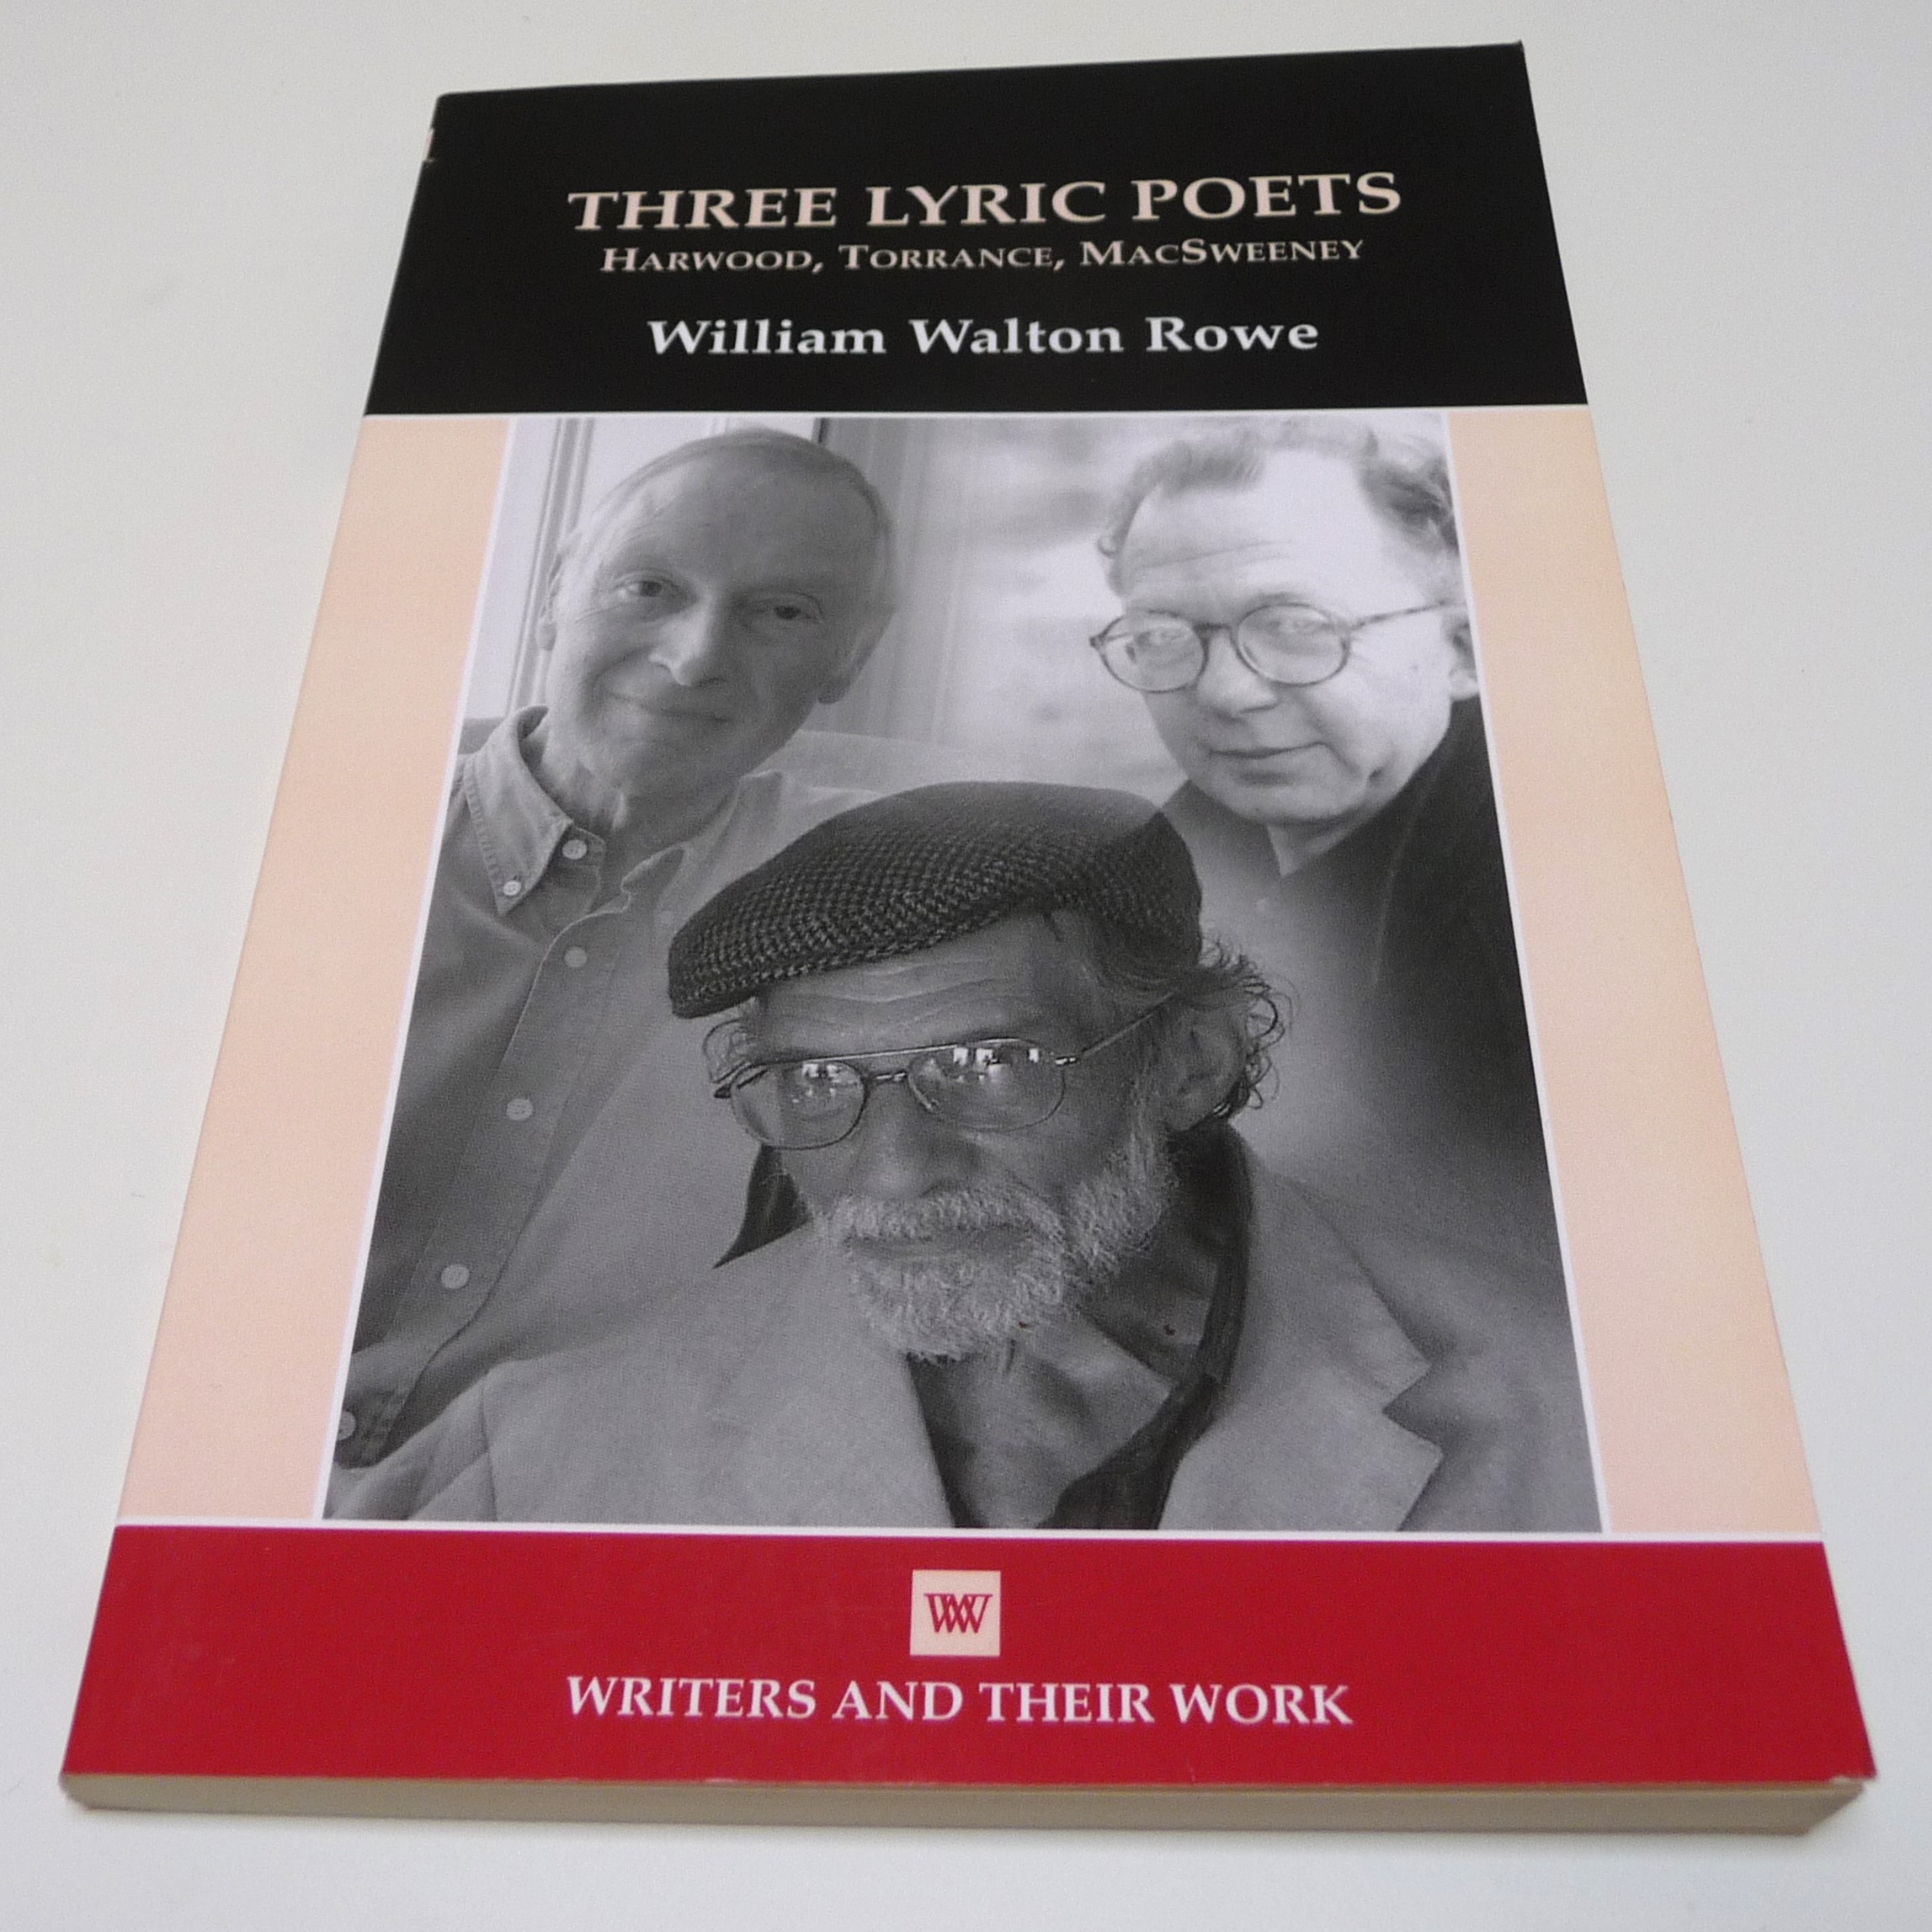 Three Lyric Poets: Harwood, Torrance, MacSweeney (Writers and Their Work) - (Lee Harwood, Chris Torrance, and Barry MacSweeney.) William Walton Rowe